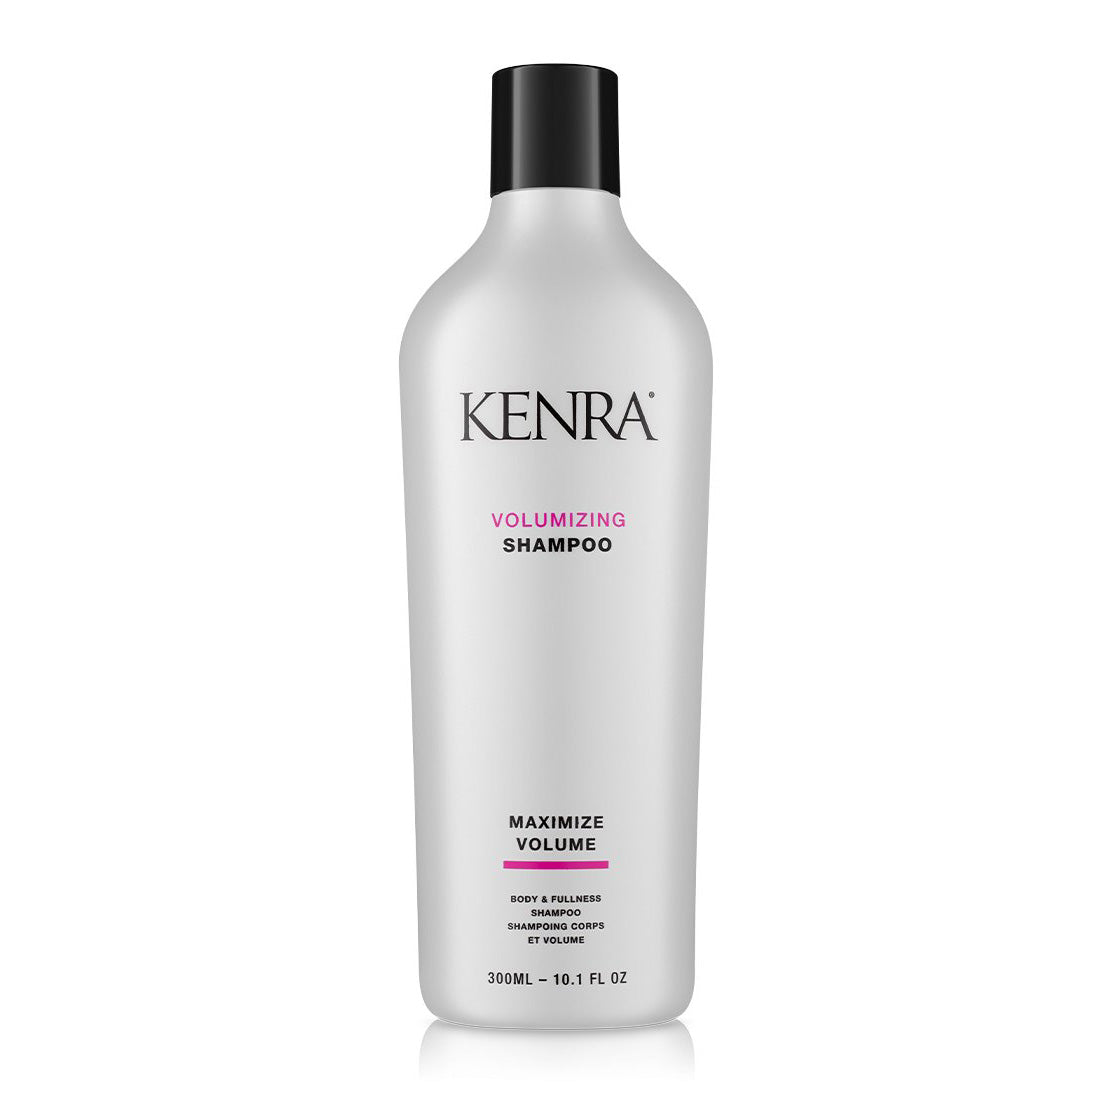 Kenra Volumizing Shampoo 300ML